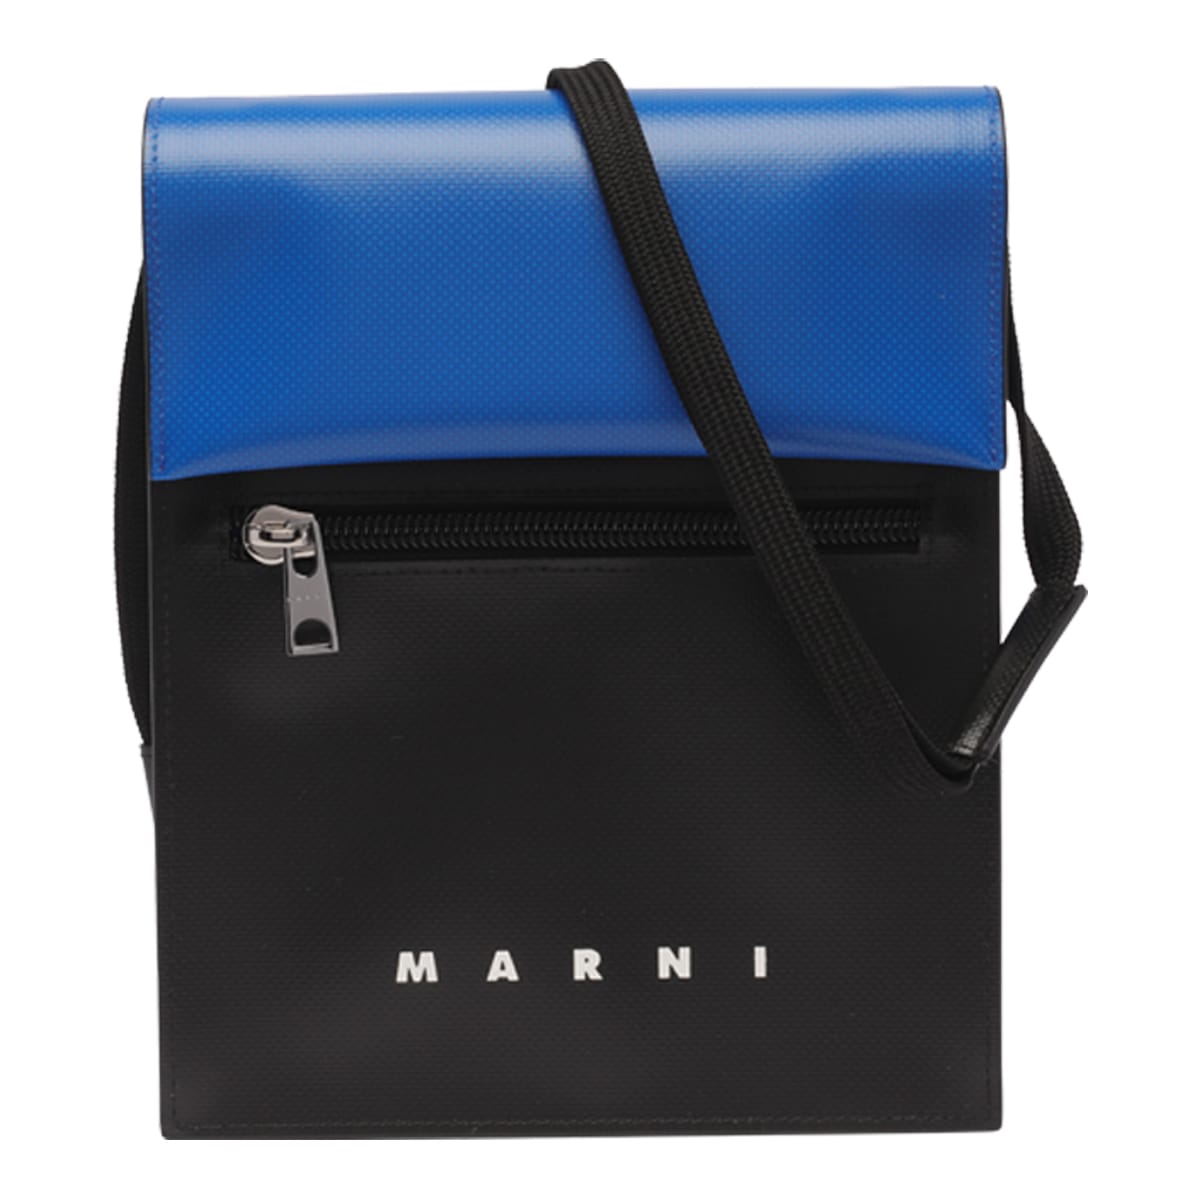 Marni Tribeca Messenger Bag